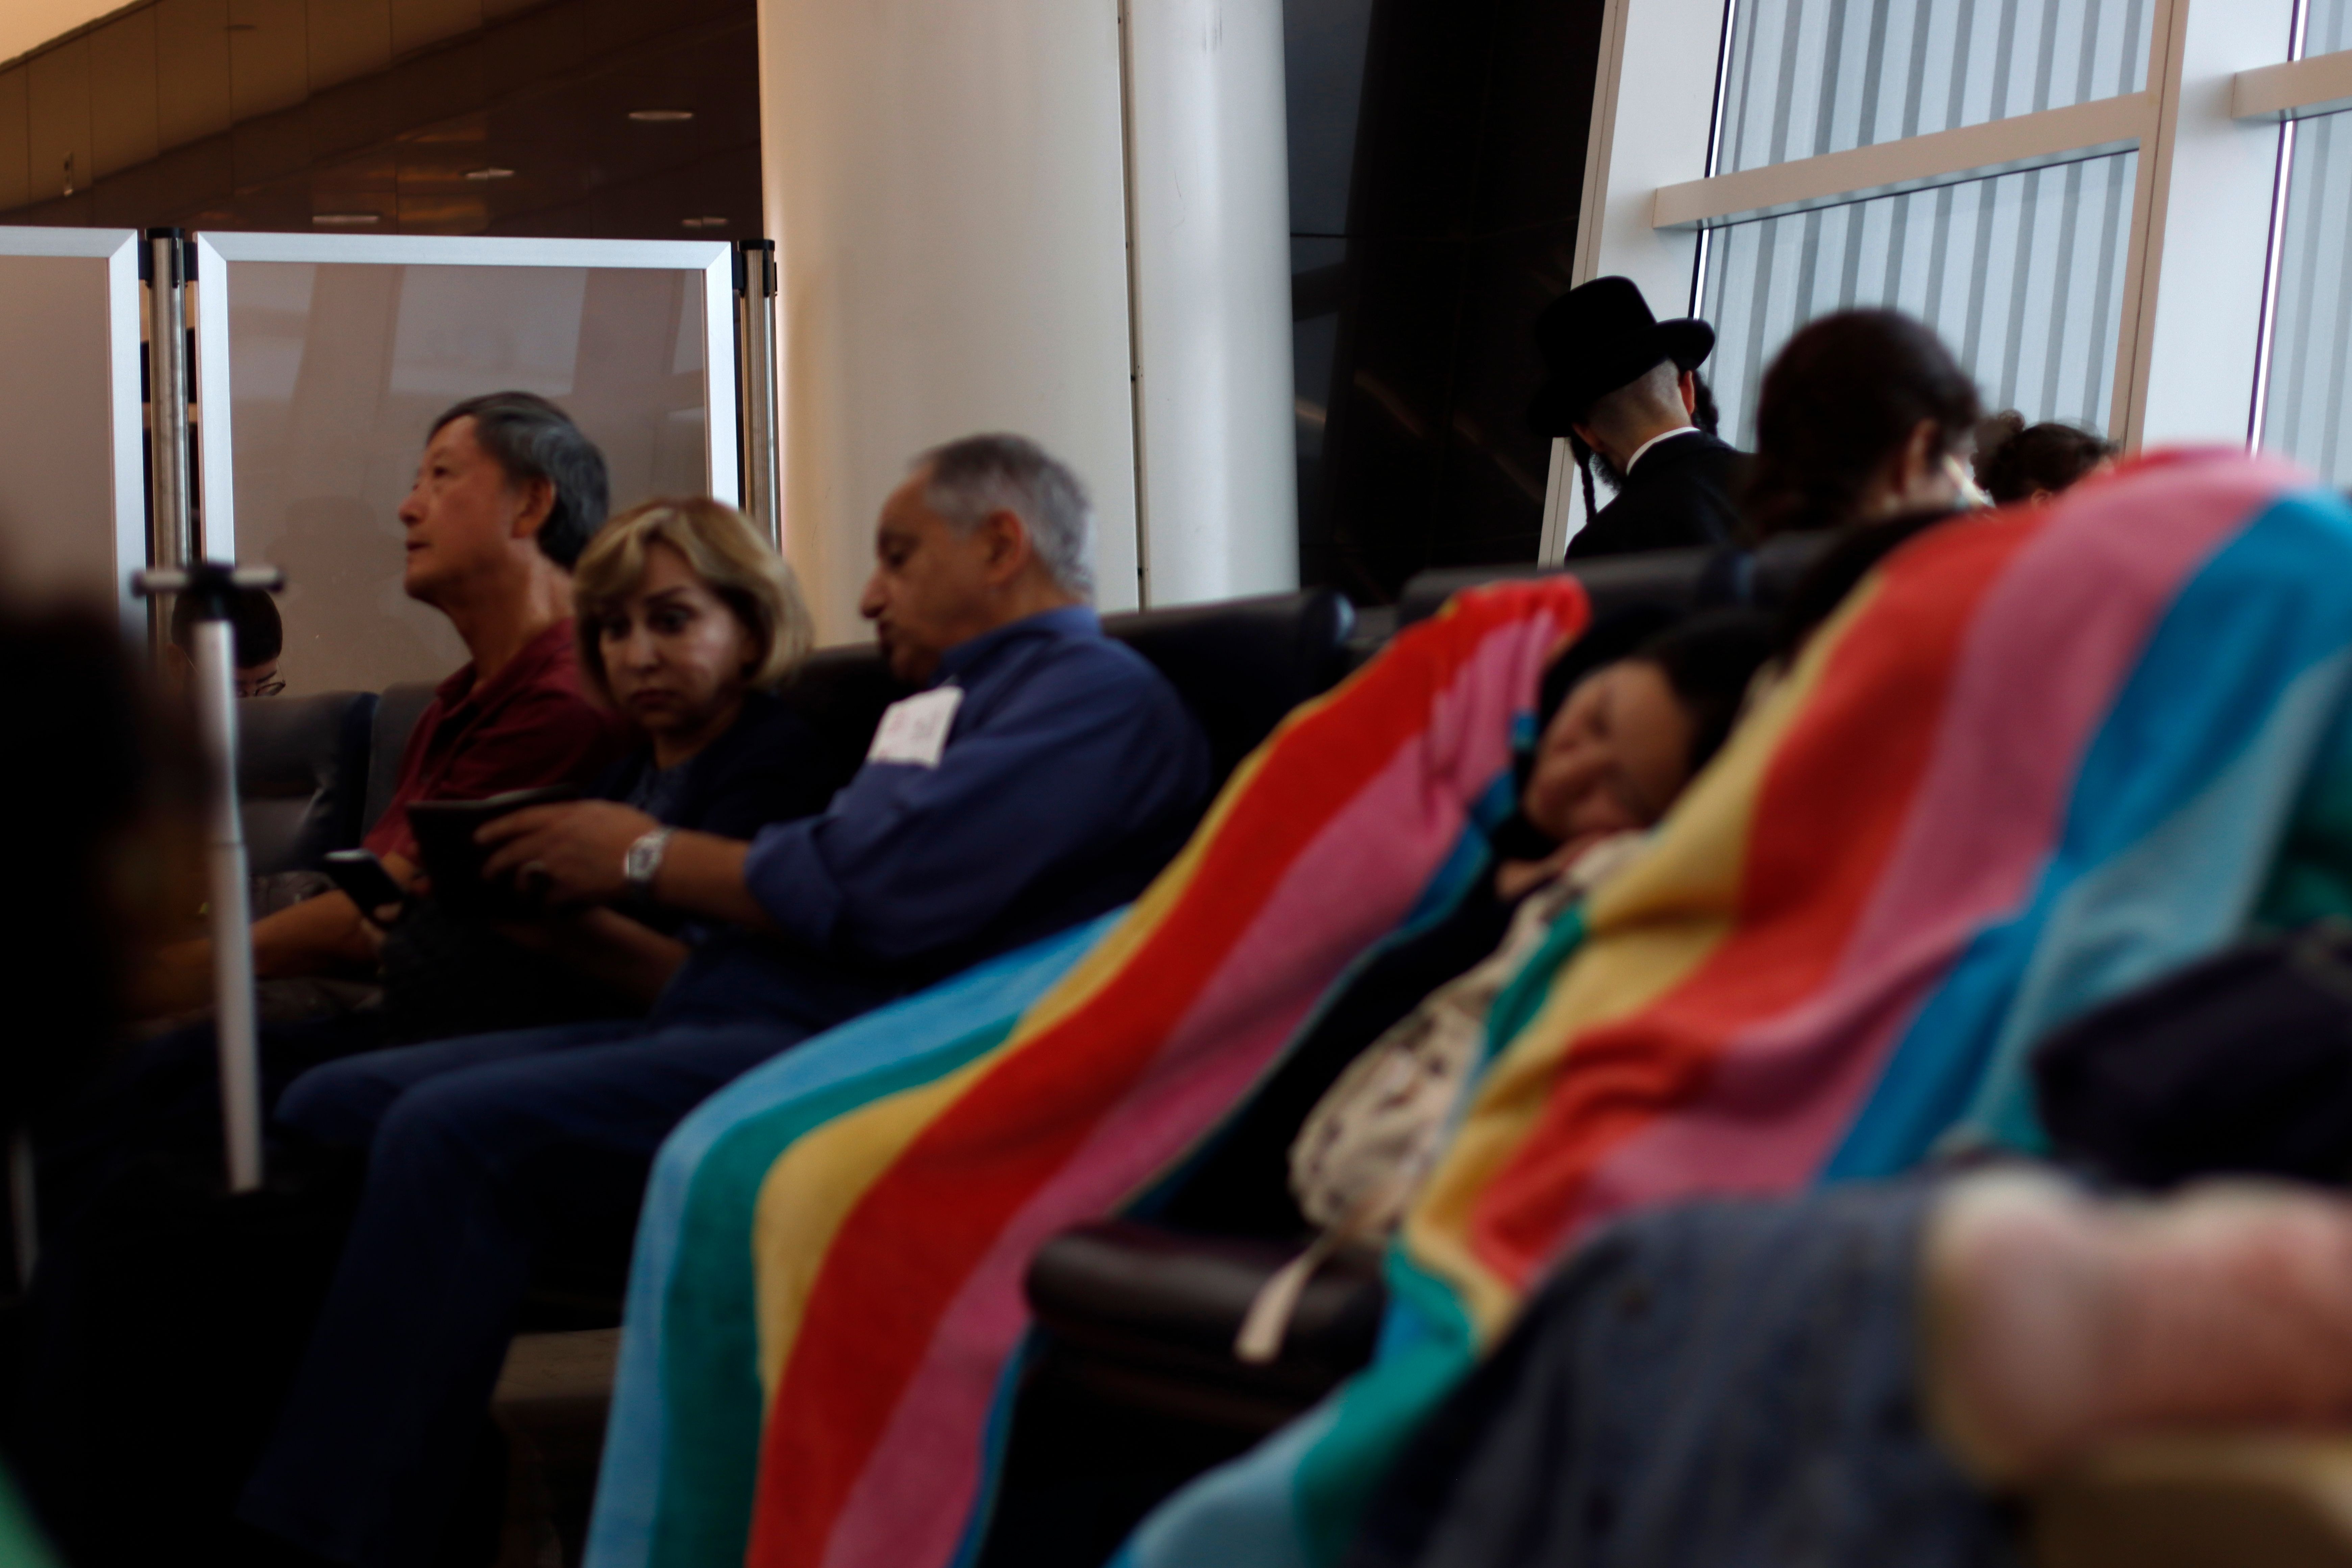 Passengers sleeping in an airport terminal.